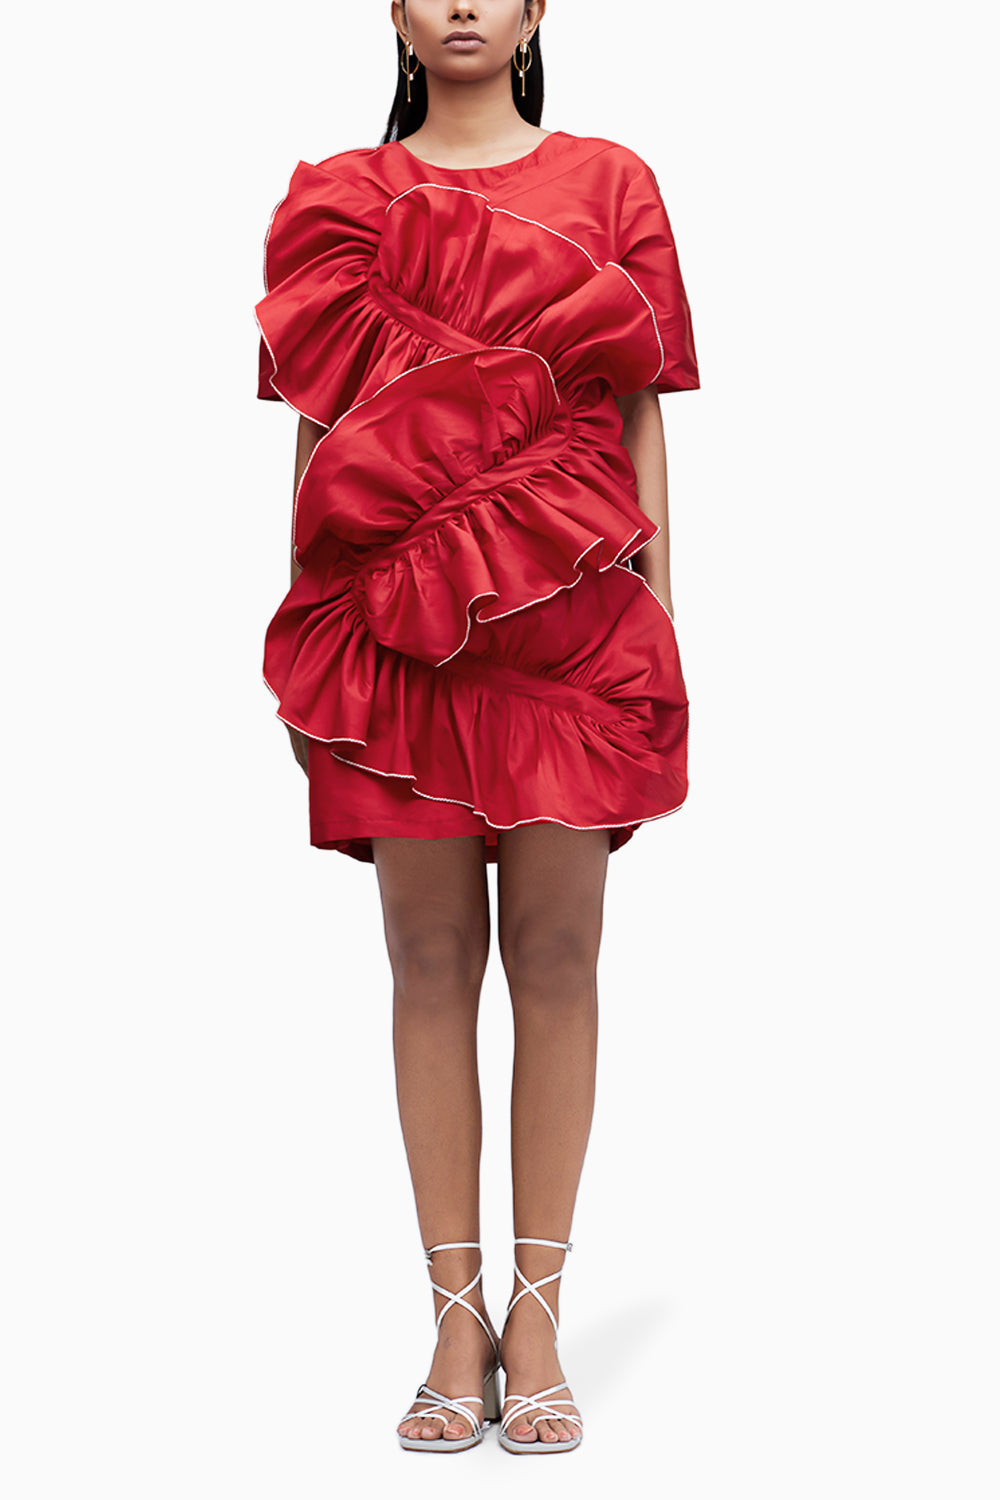 Echo Red Eroded Taffeta Dress